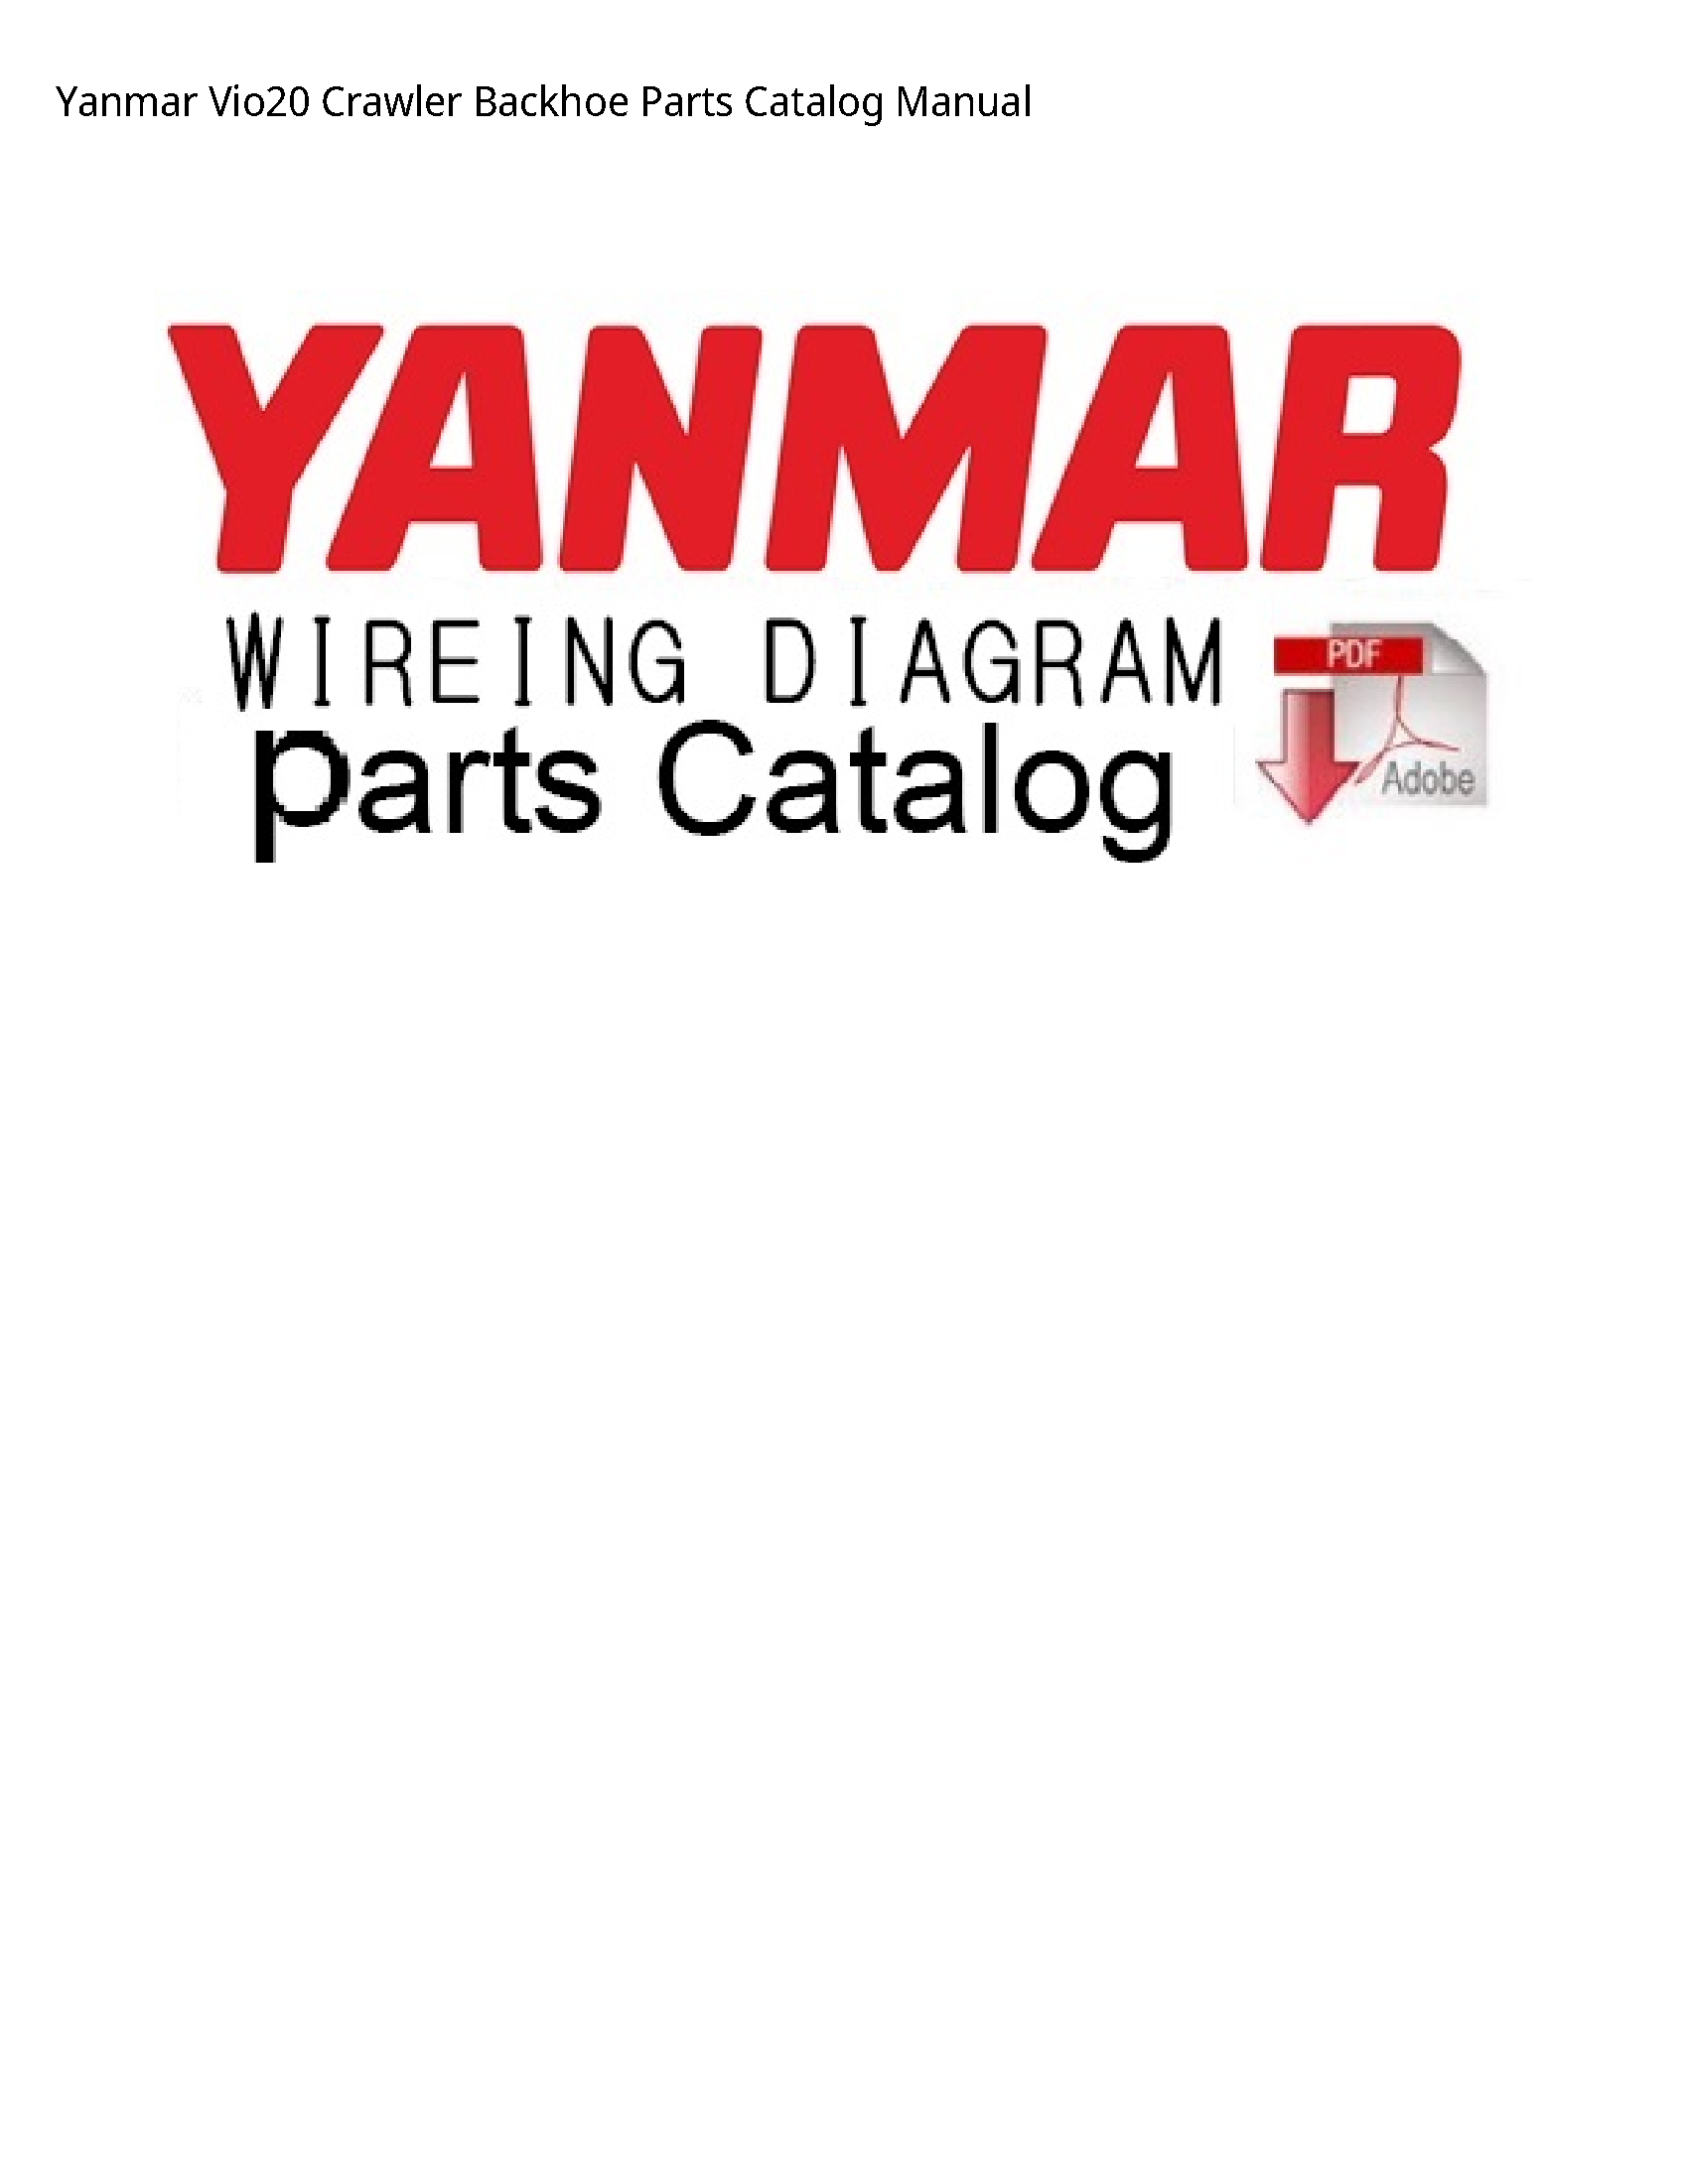 Yanmar Vio20 Crawler Backhoe Parts Catalog manual